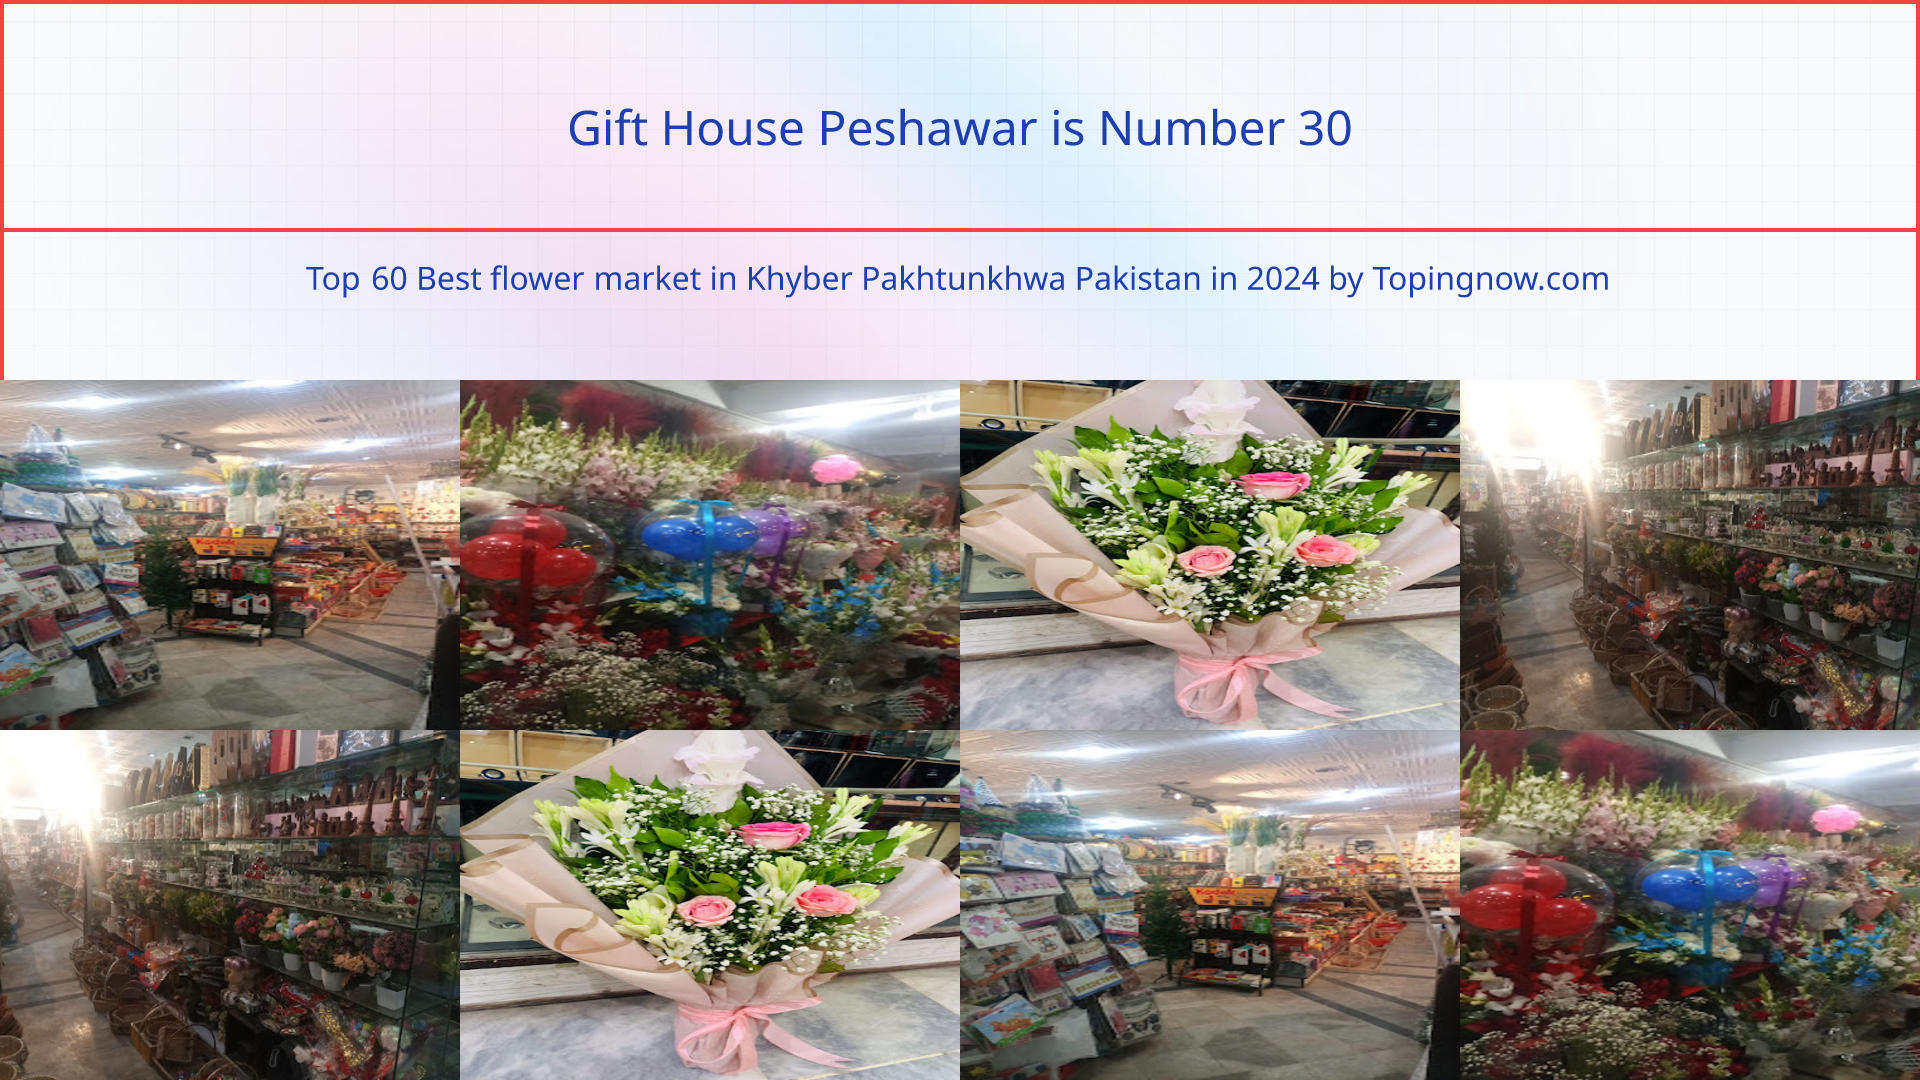 Gift House Peshawar: Top 60 Best flower market in Khyber Pakhtunkhwa Pakistan in 2024